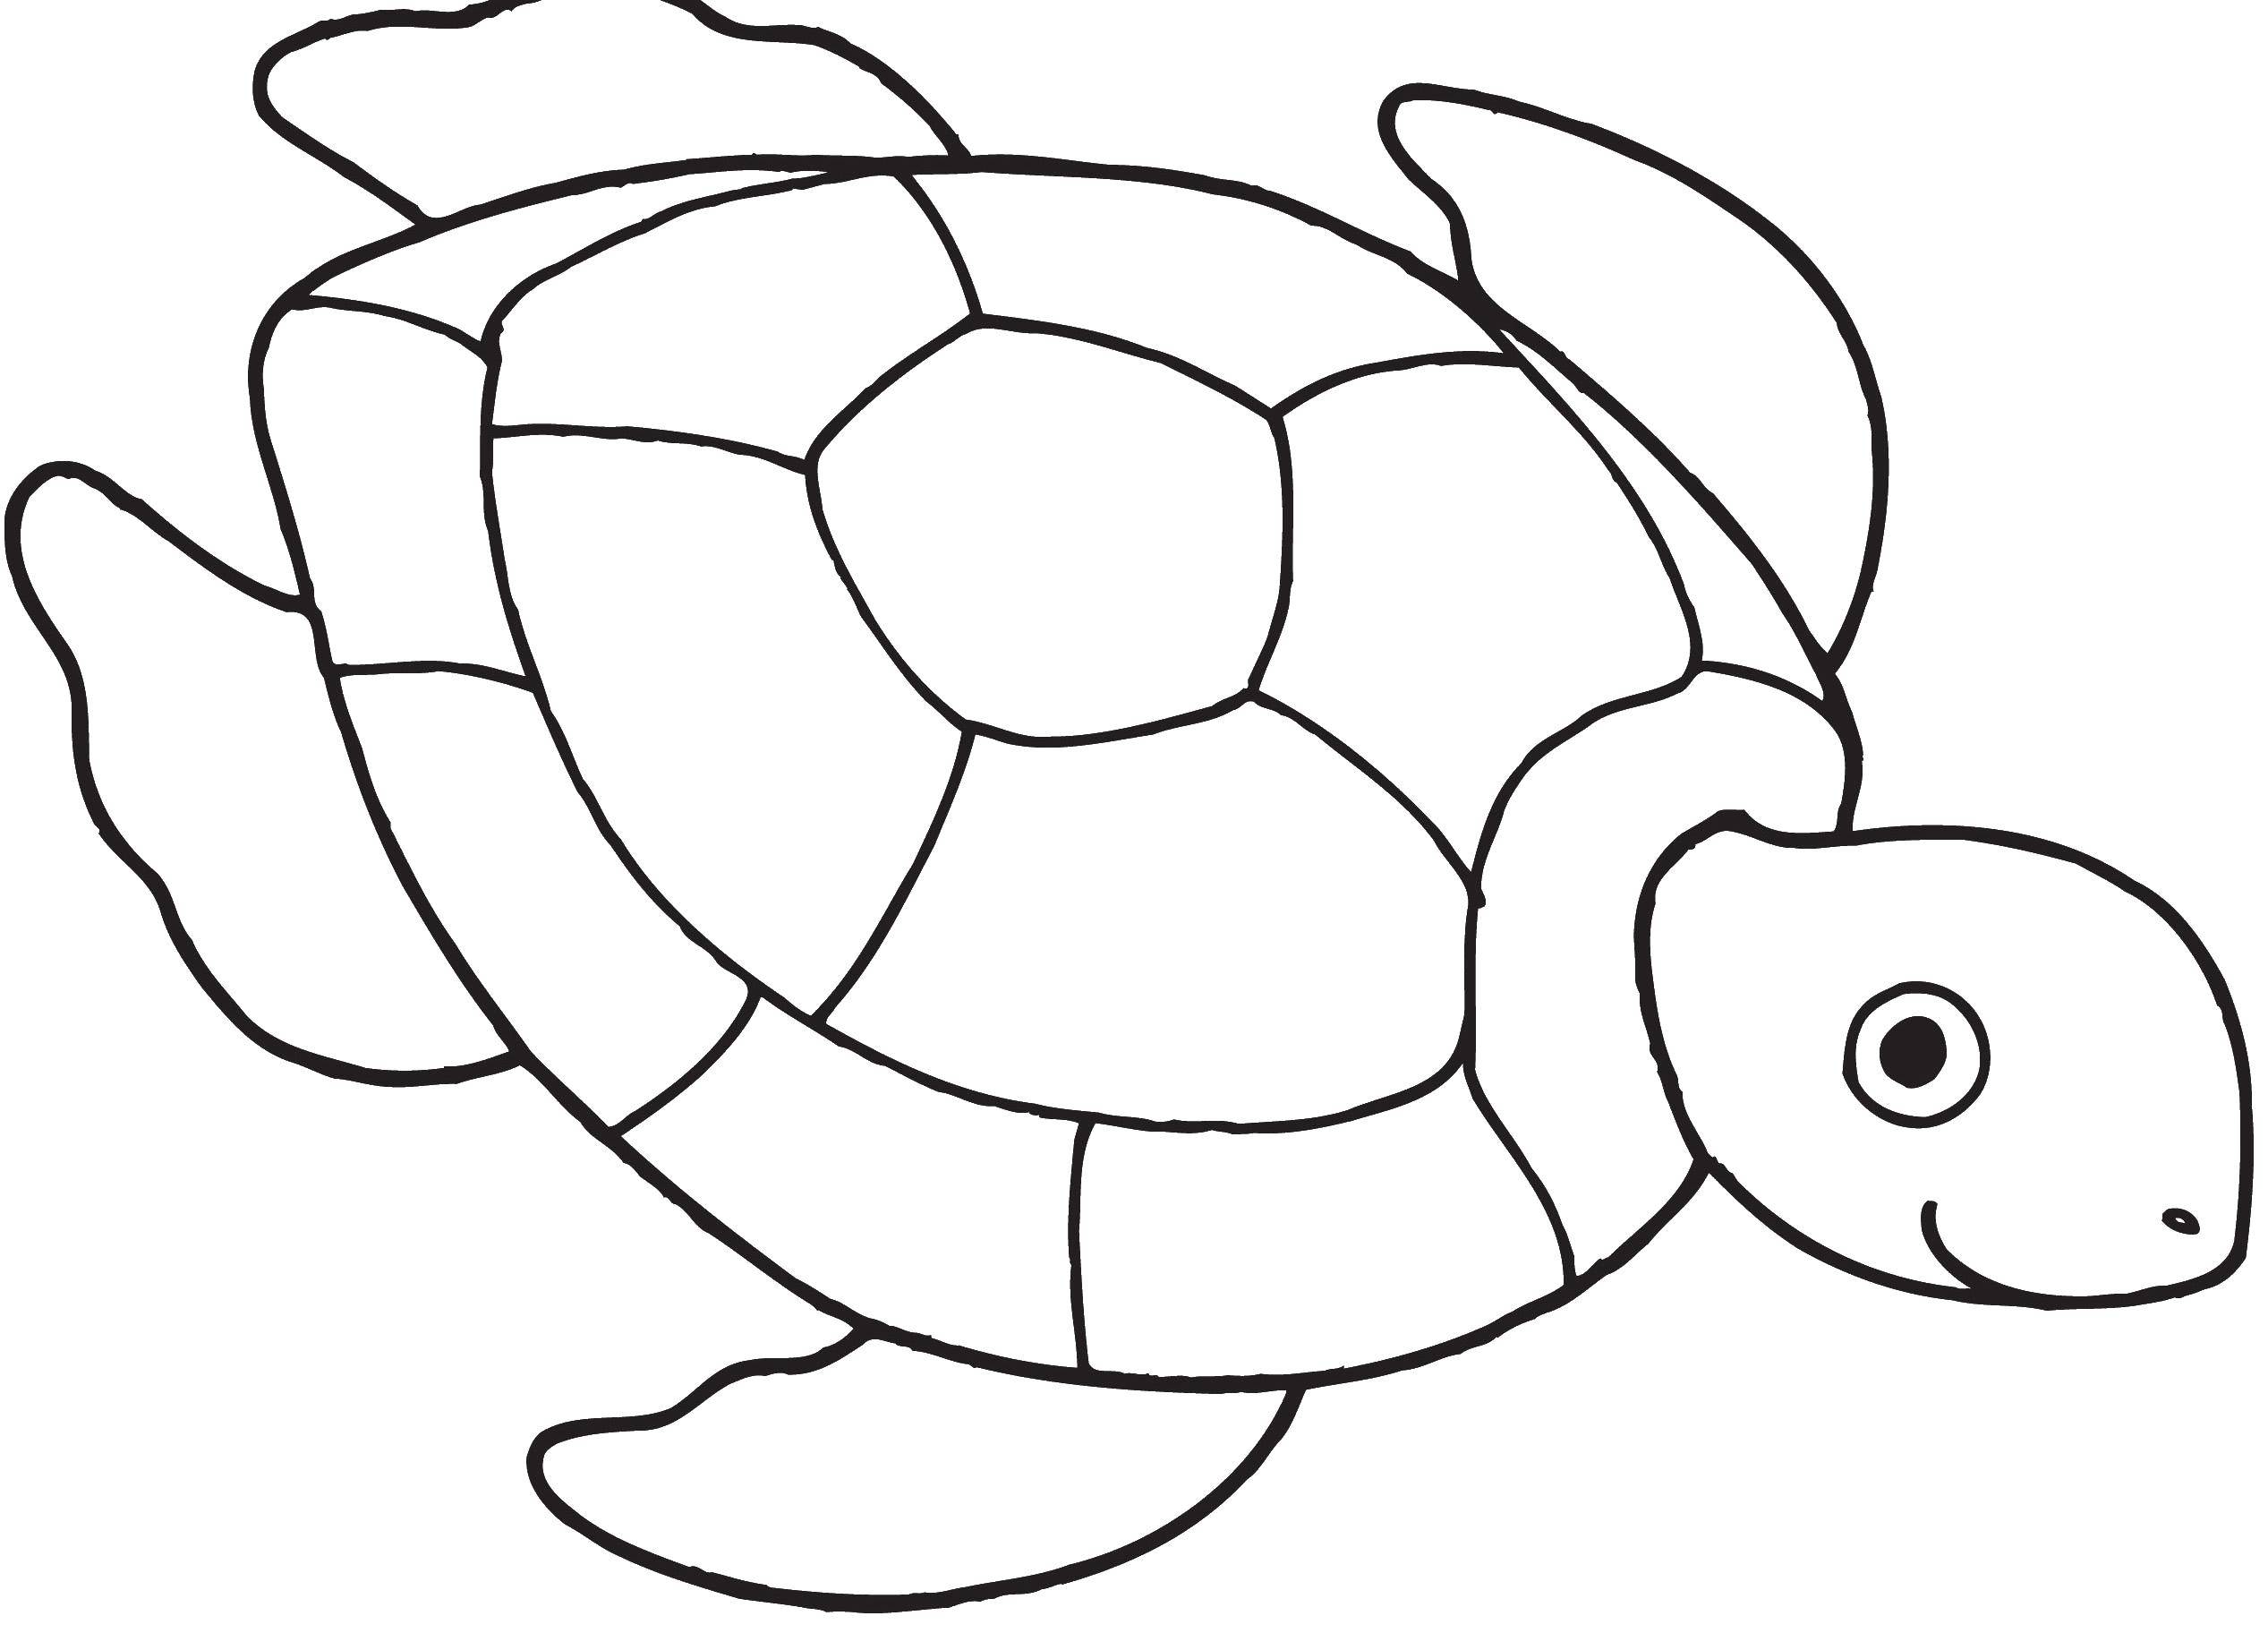 Название: Раскраска Черепашка счастлива. Категория: Черепаха. Теги: Рептилия, черепаха.